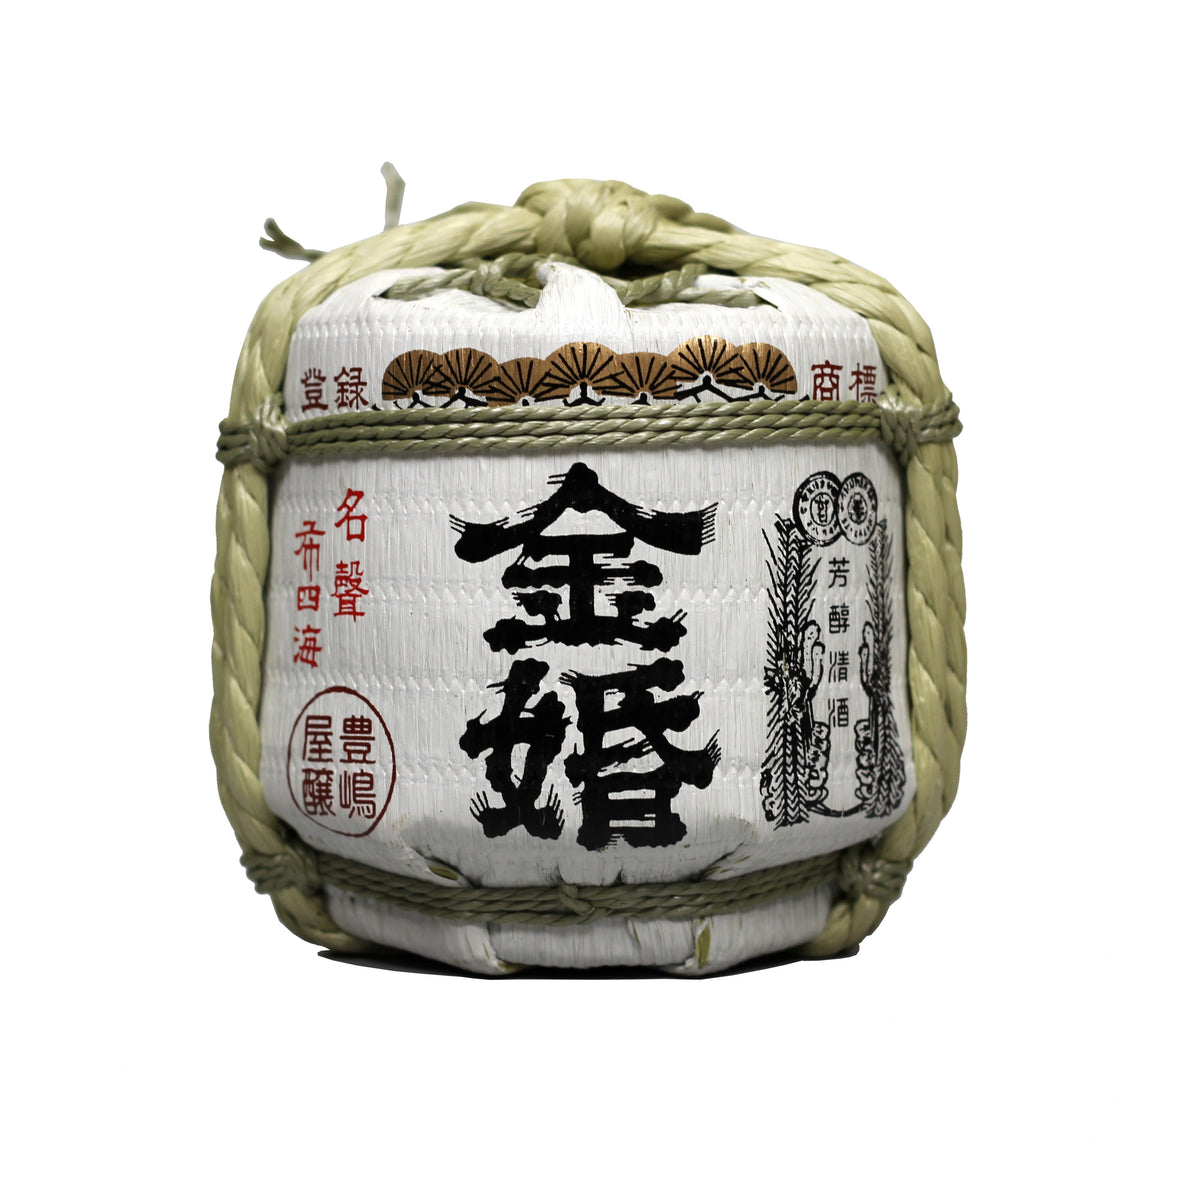 Saké japonais,Kinkon barrel Josen,300 ml,Lot de 1 bouteilles,15 à